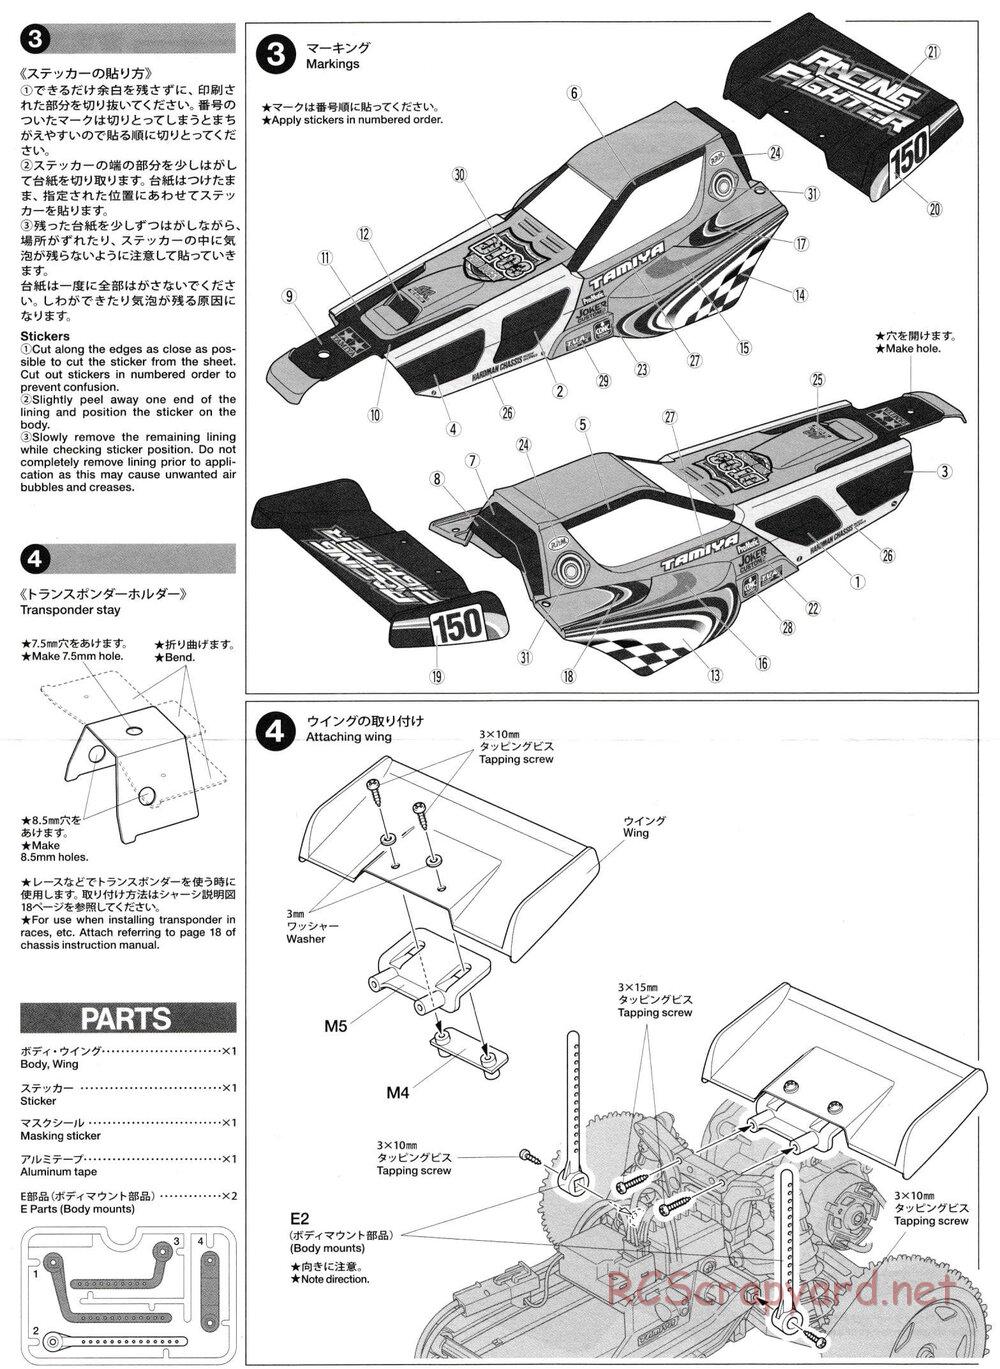 Tamiya - Racing Fighter Chassis - Manual - Page 3